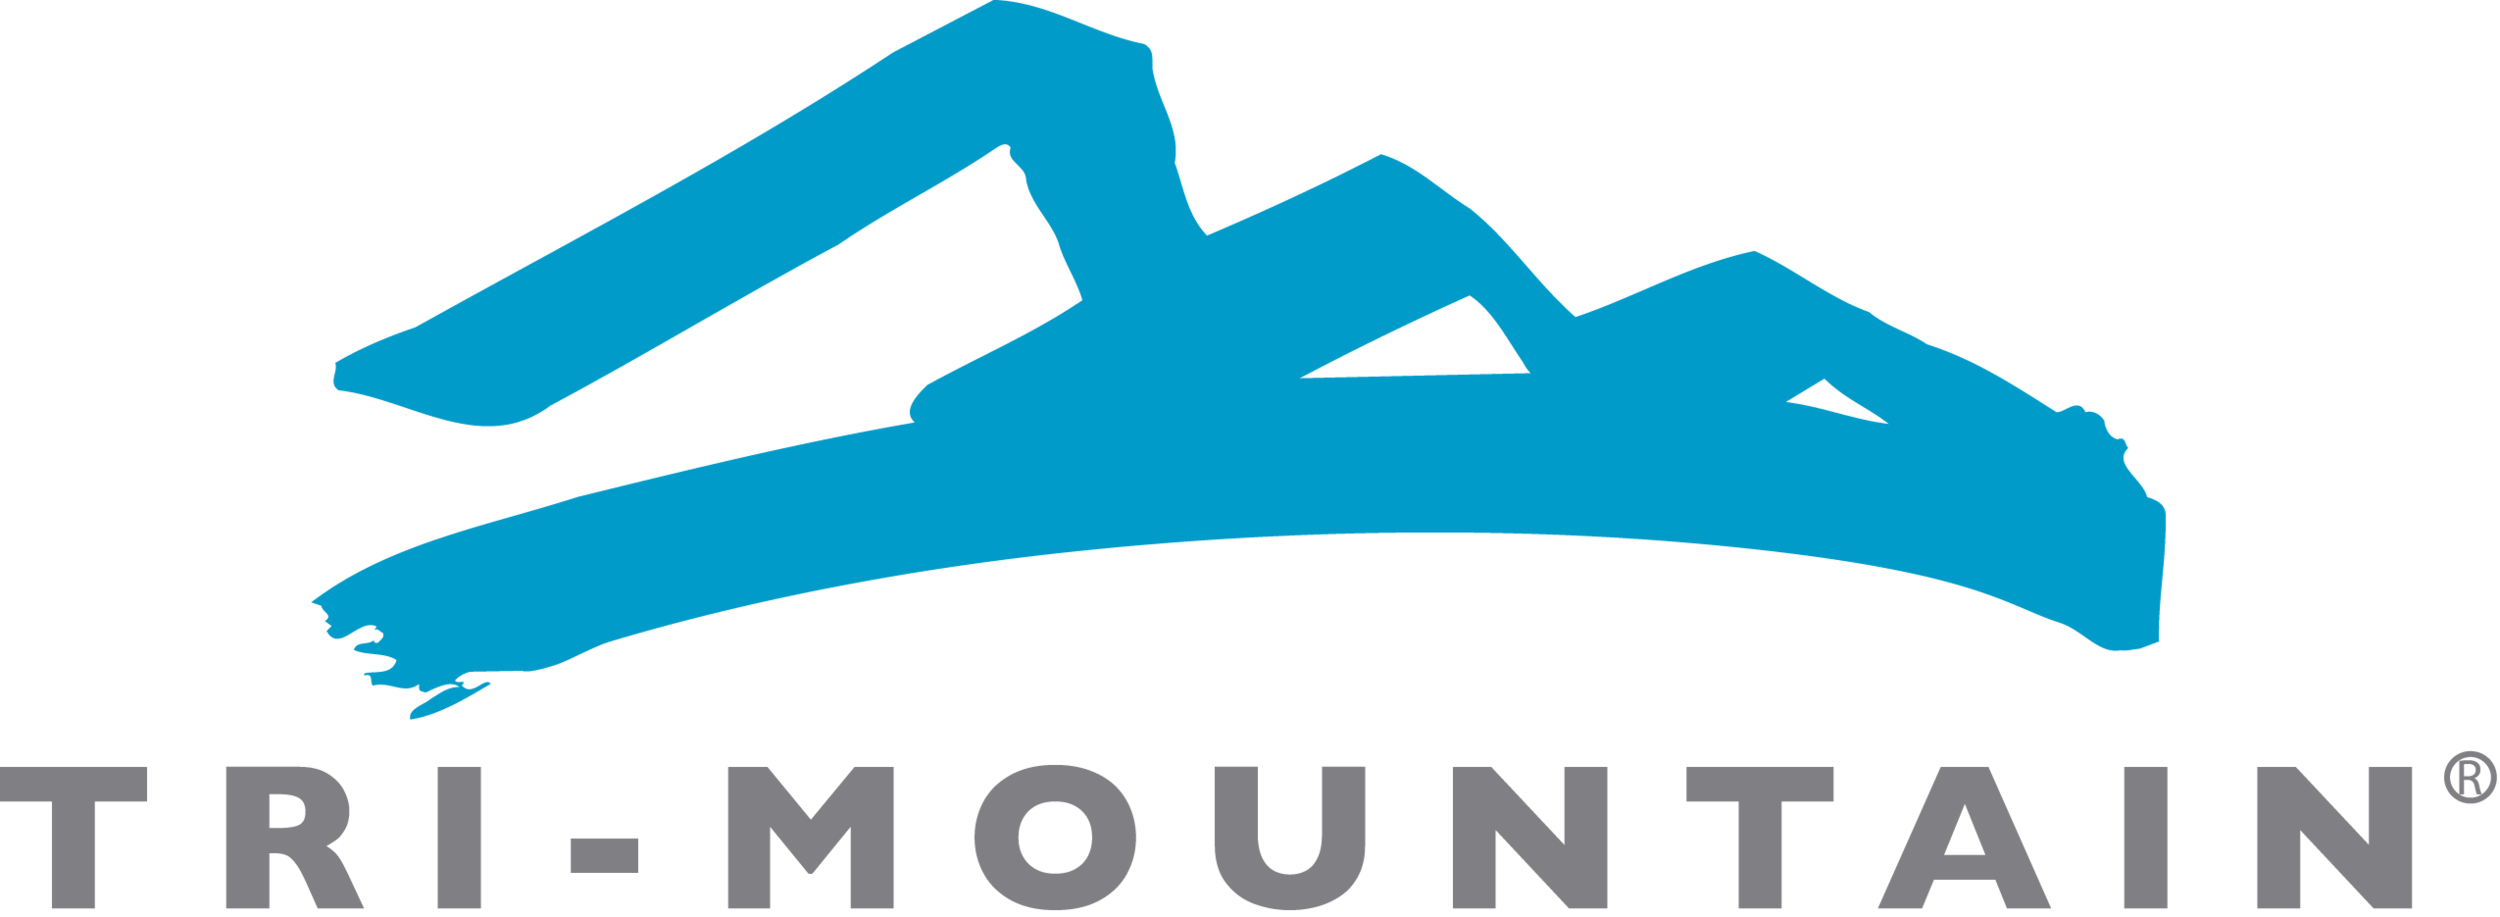 Tri Mountain logo.png